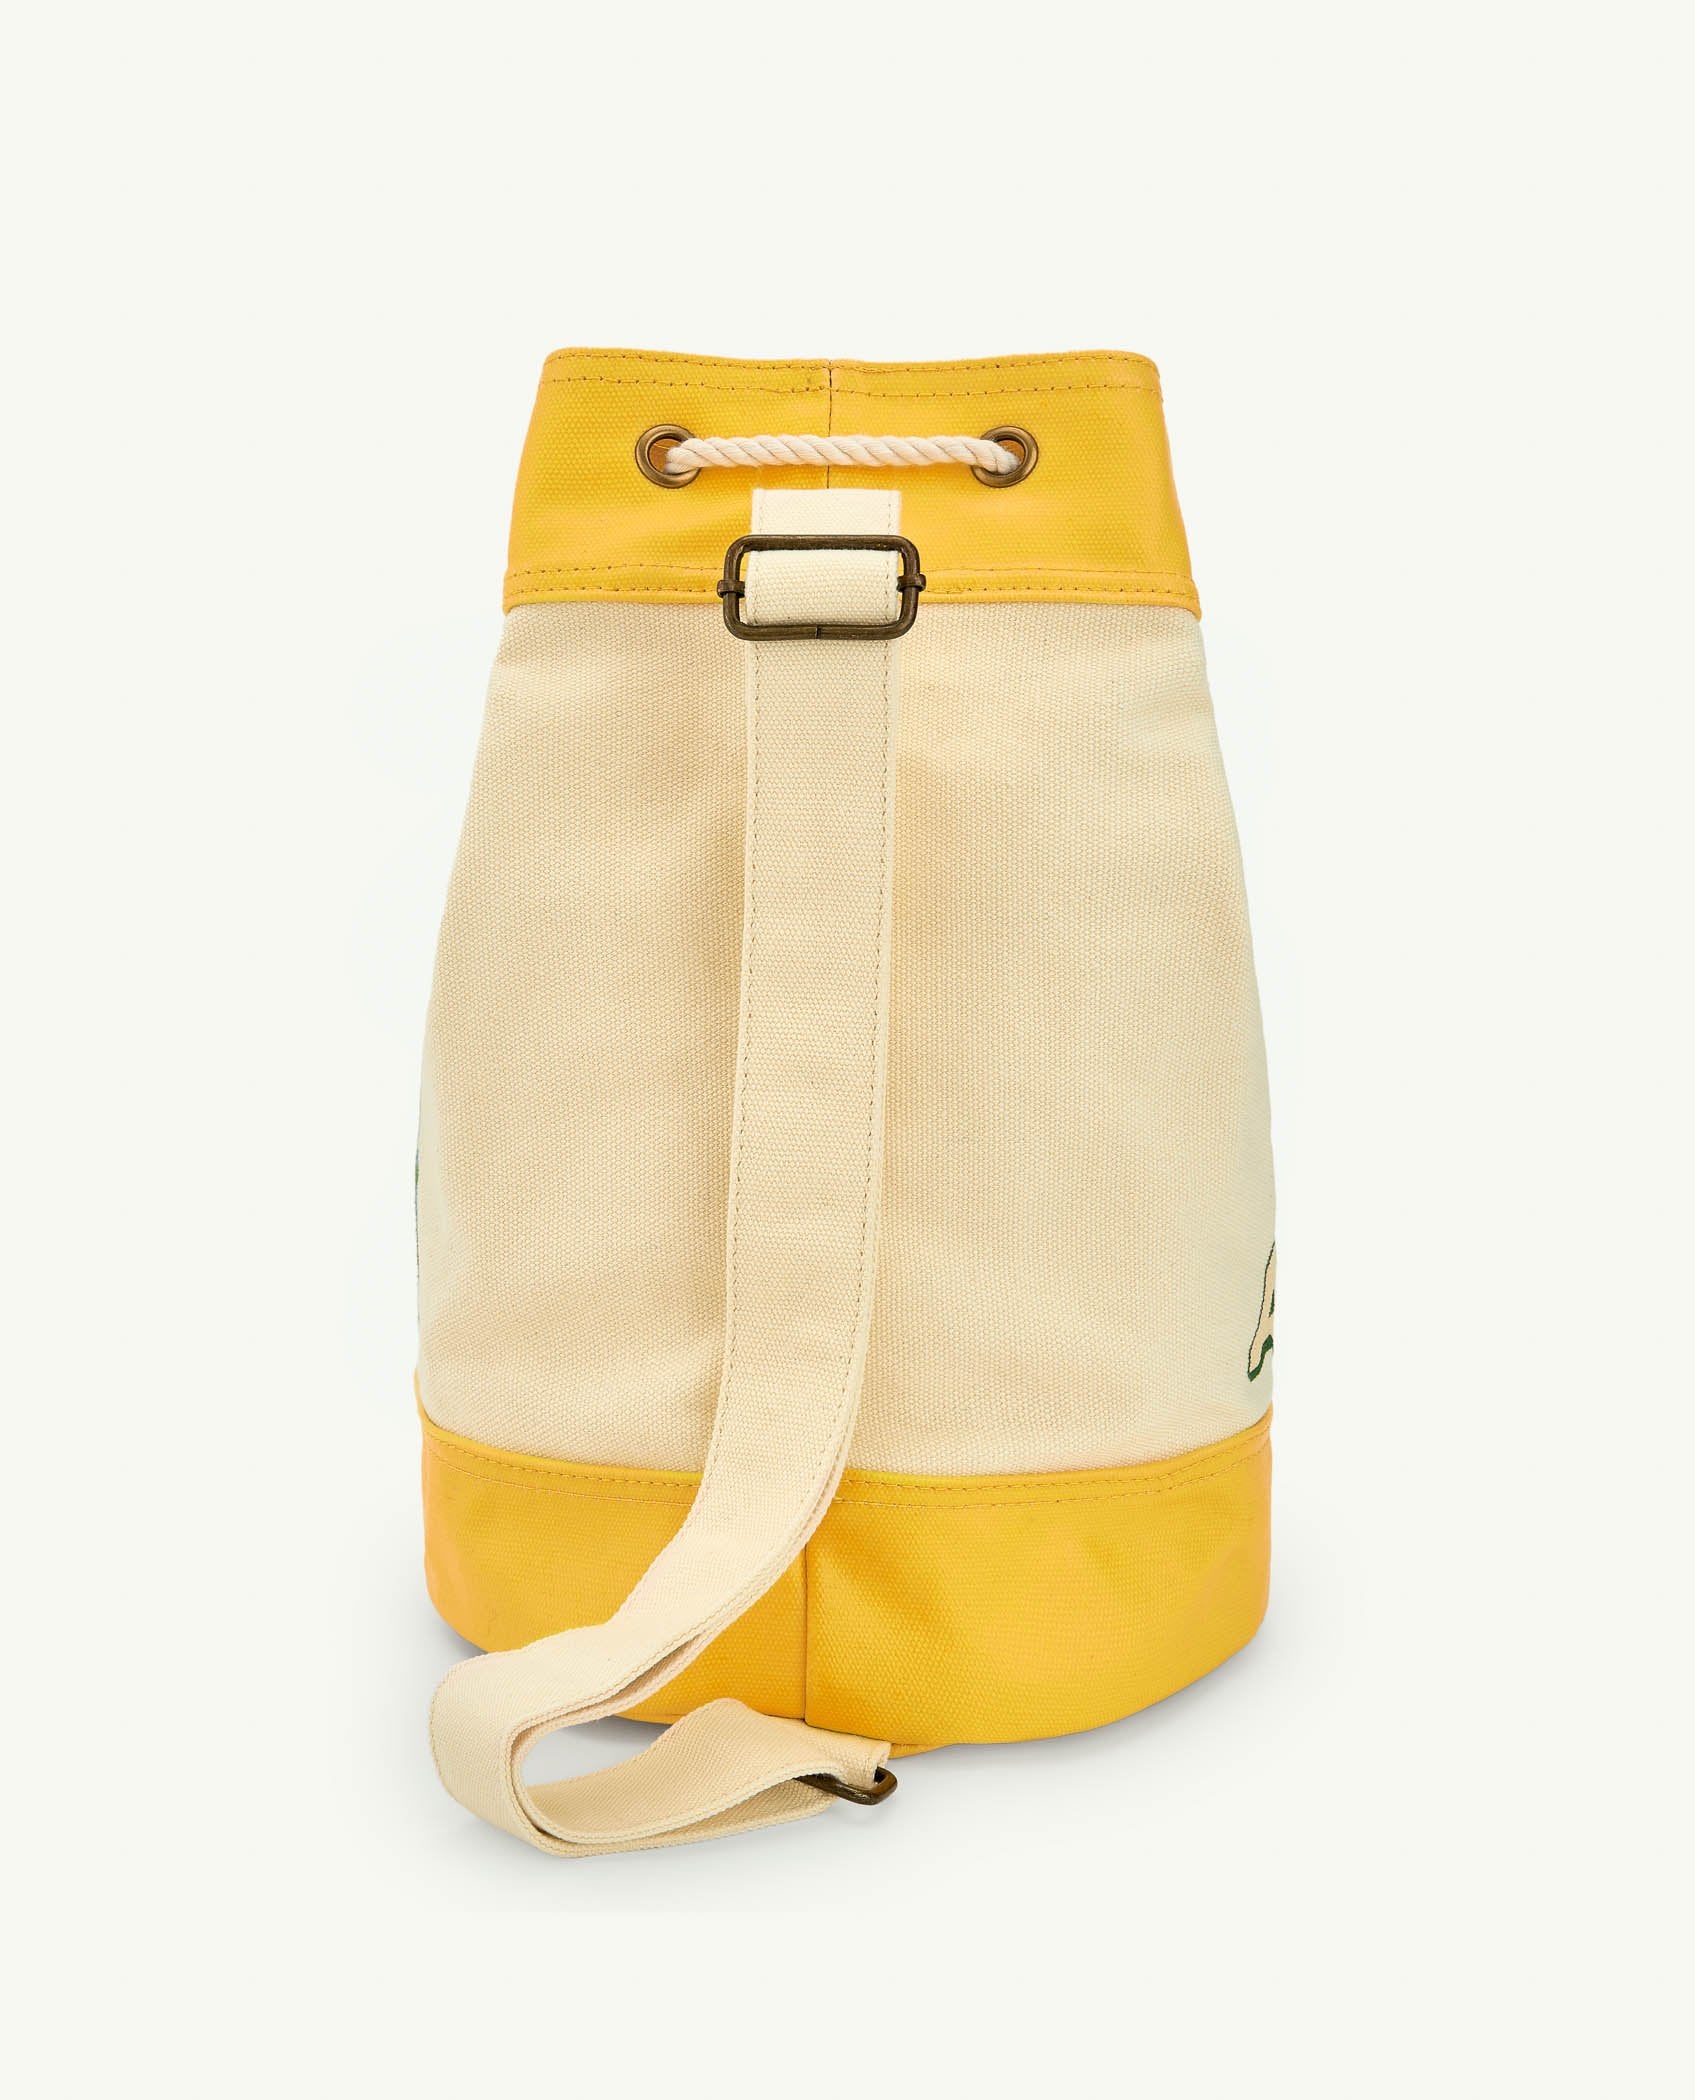 Babar Yellow Drawstring Backpack PRODUCT BACK